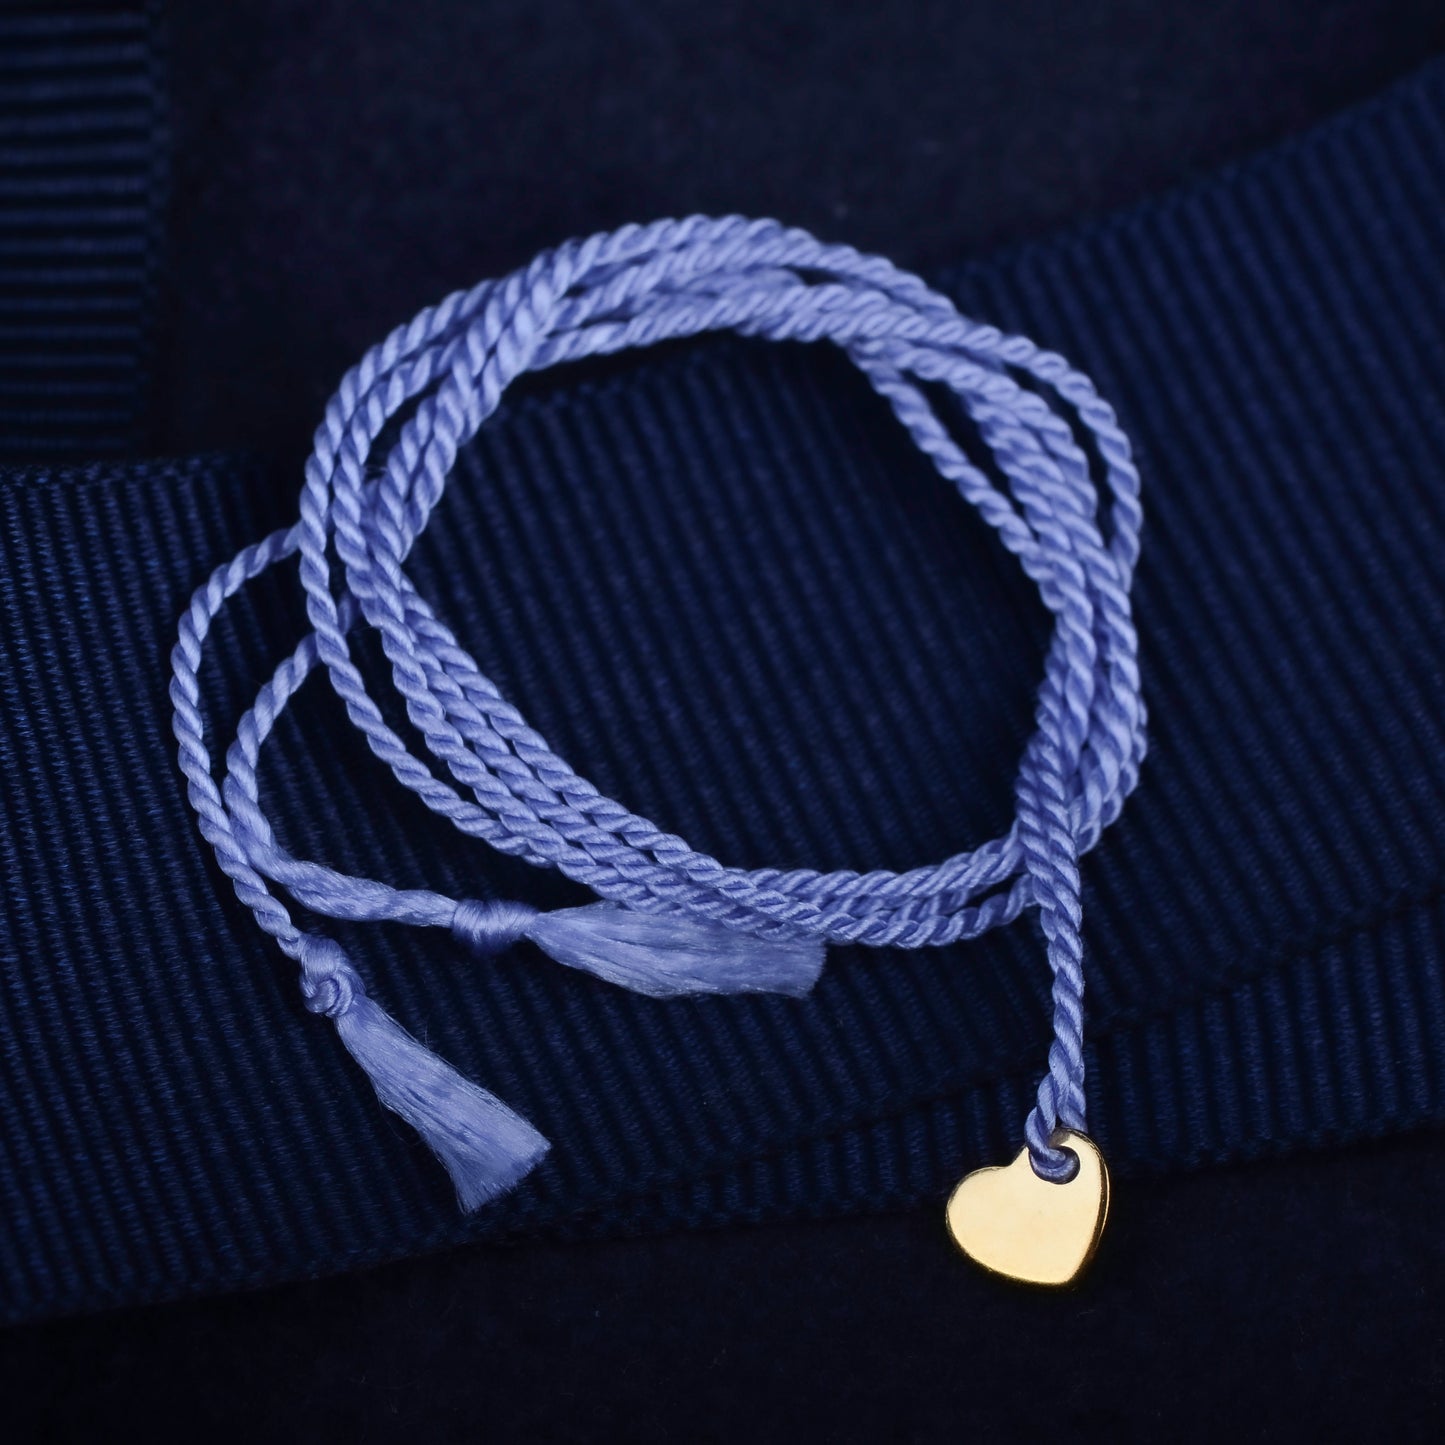 Bracelet love knot ❤ heart under the belt